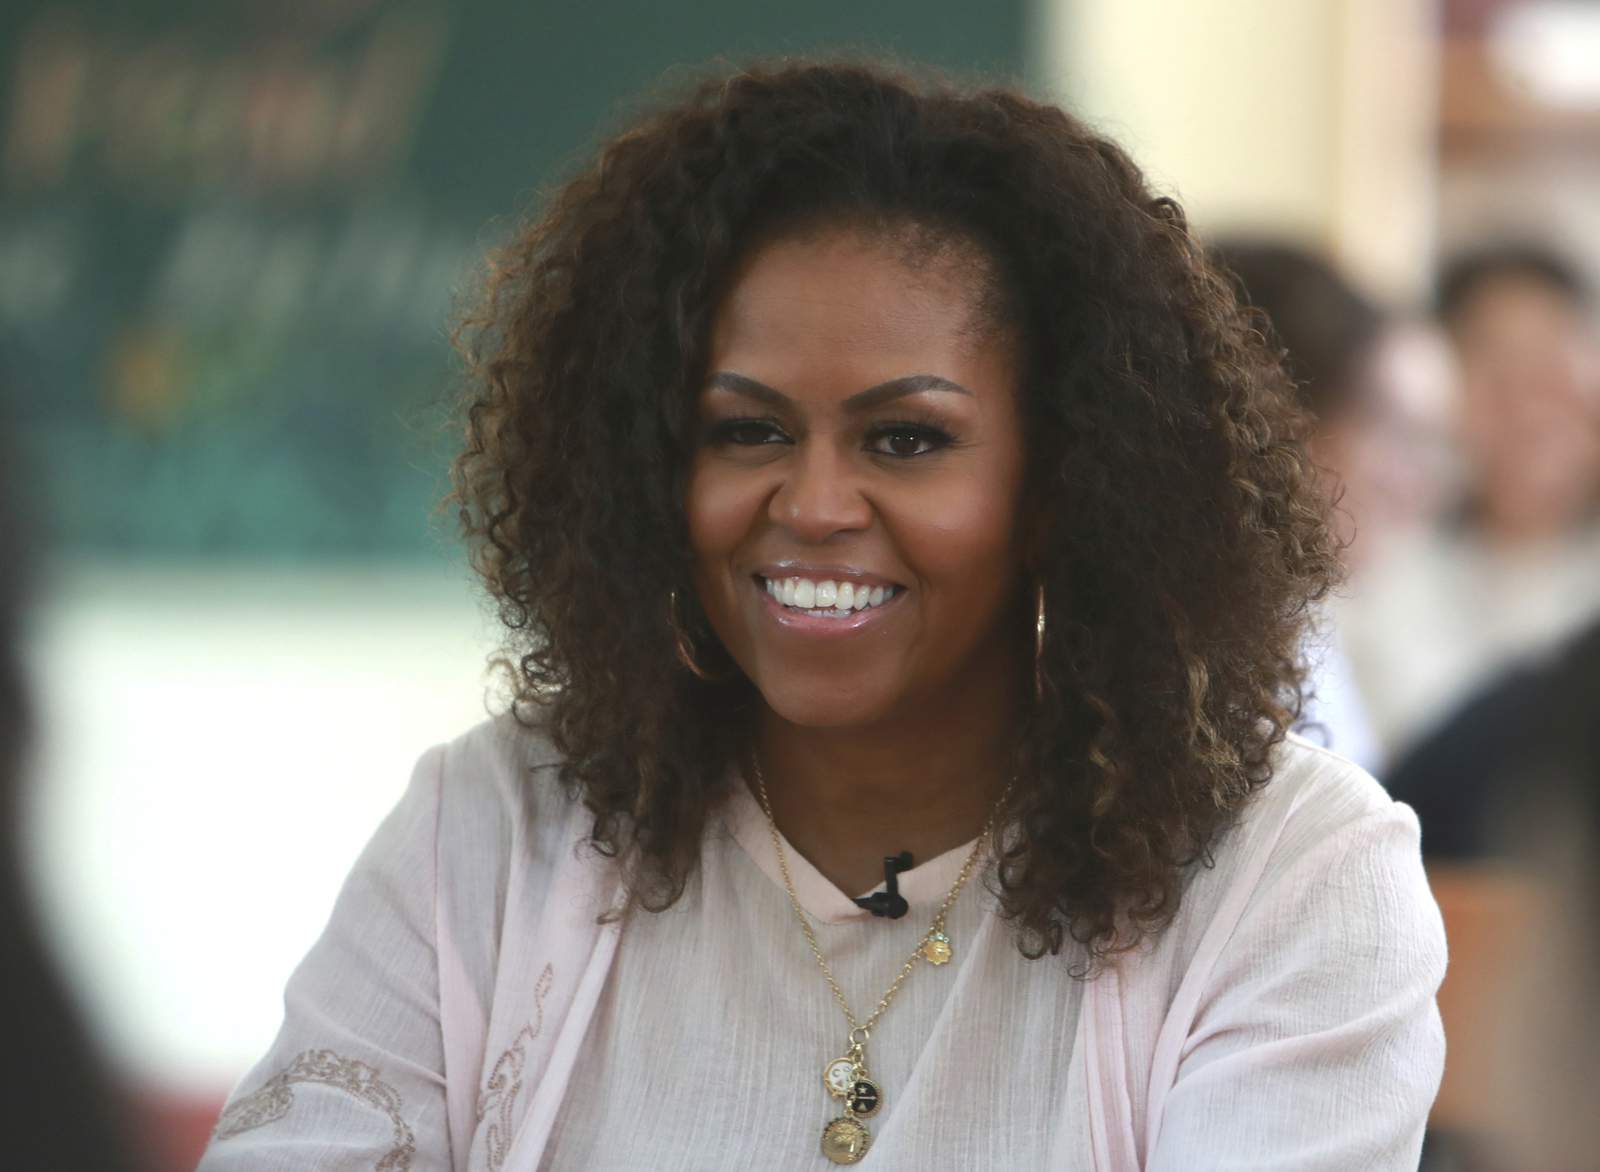 Michelle Obama, Mia Hamm among 9 chosen for Women’s HOF